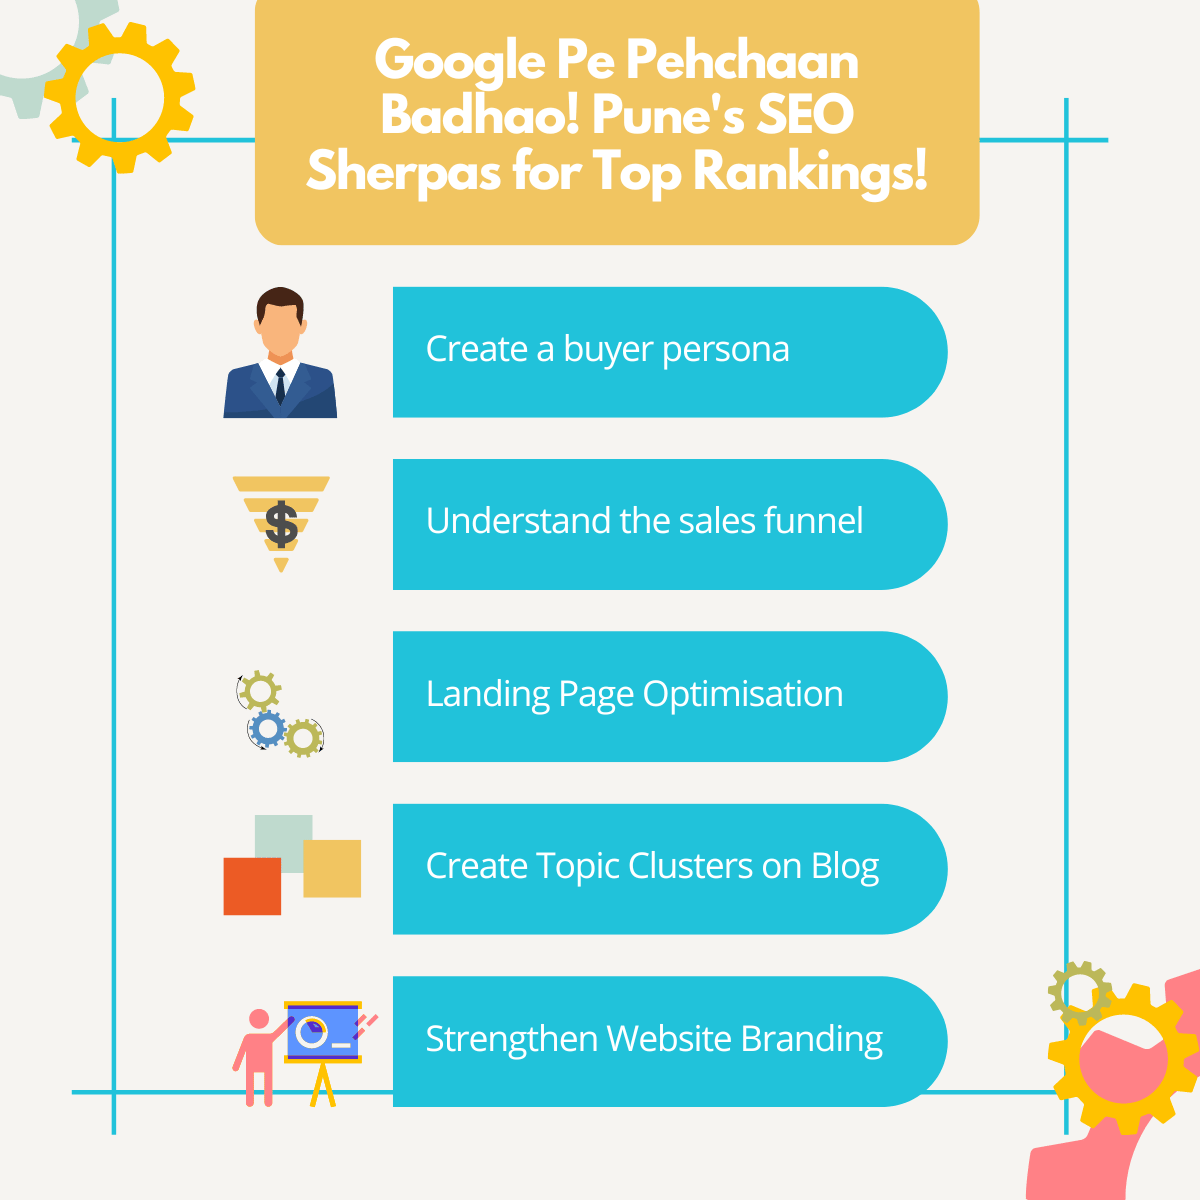 Google Pe Pehchaan Badhao! Pune's SEO Sherpas for Top Rankings!